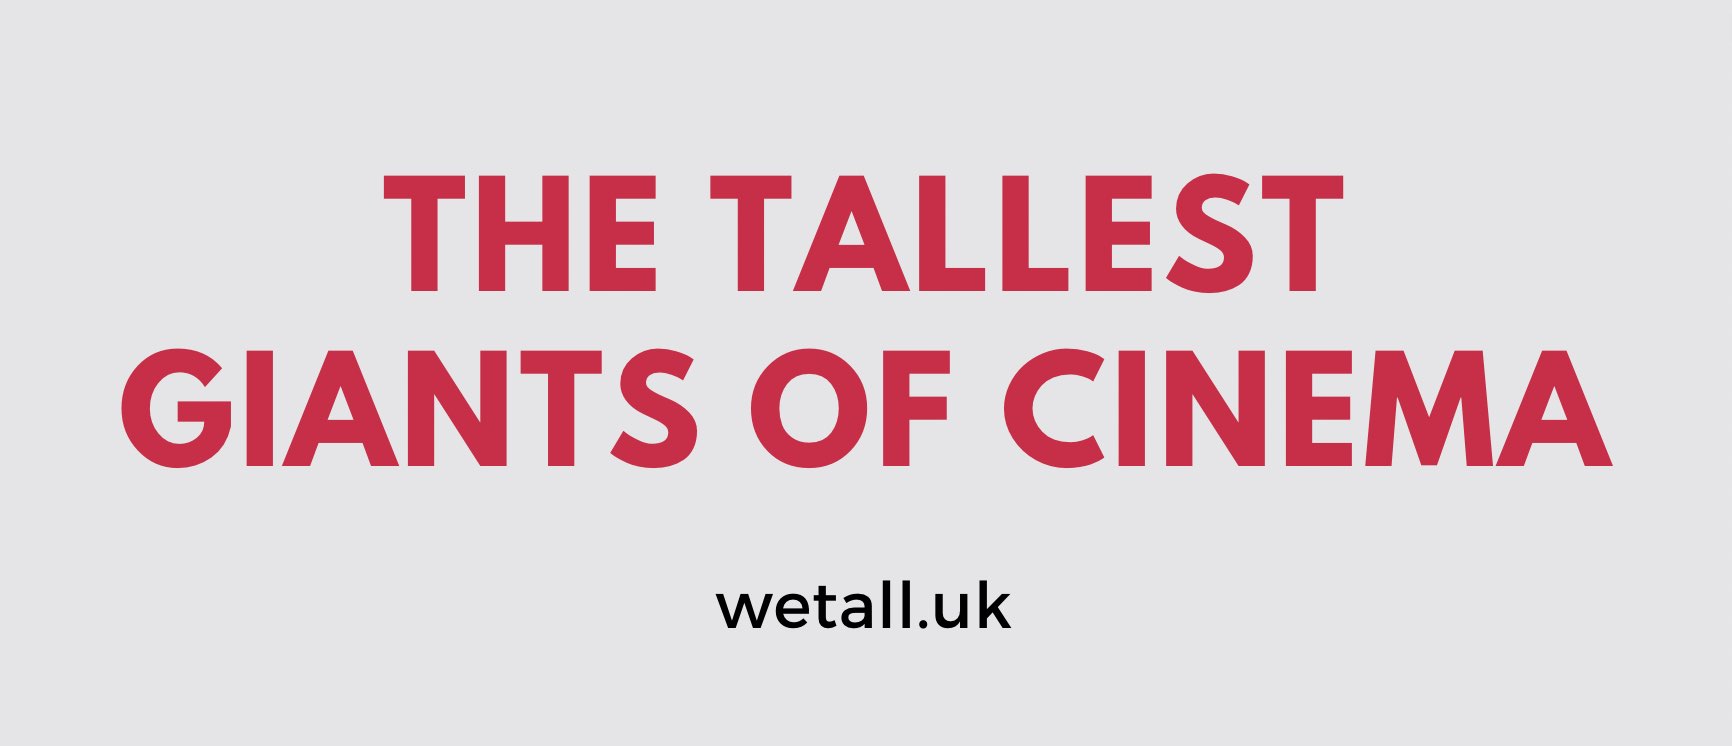 TALLEST GIANTS OF CINEMA